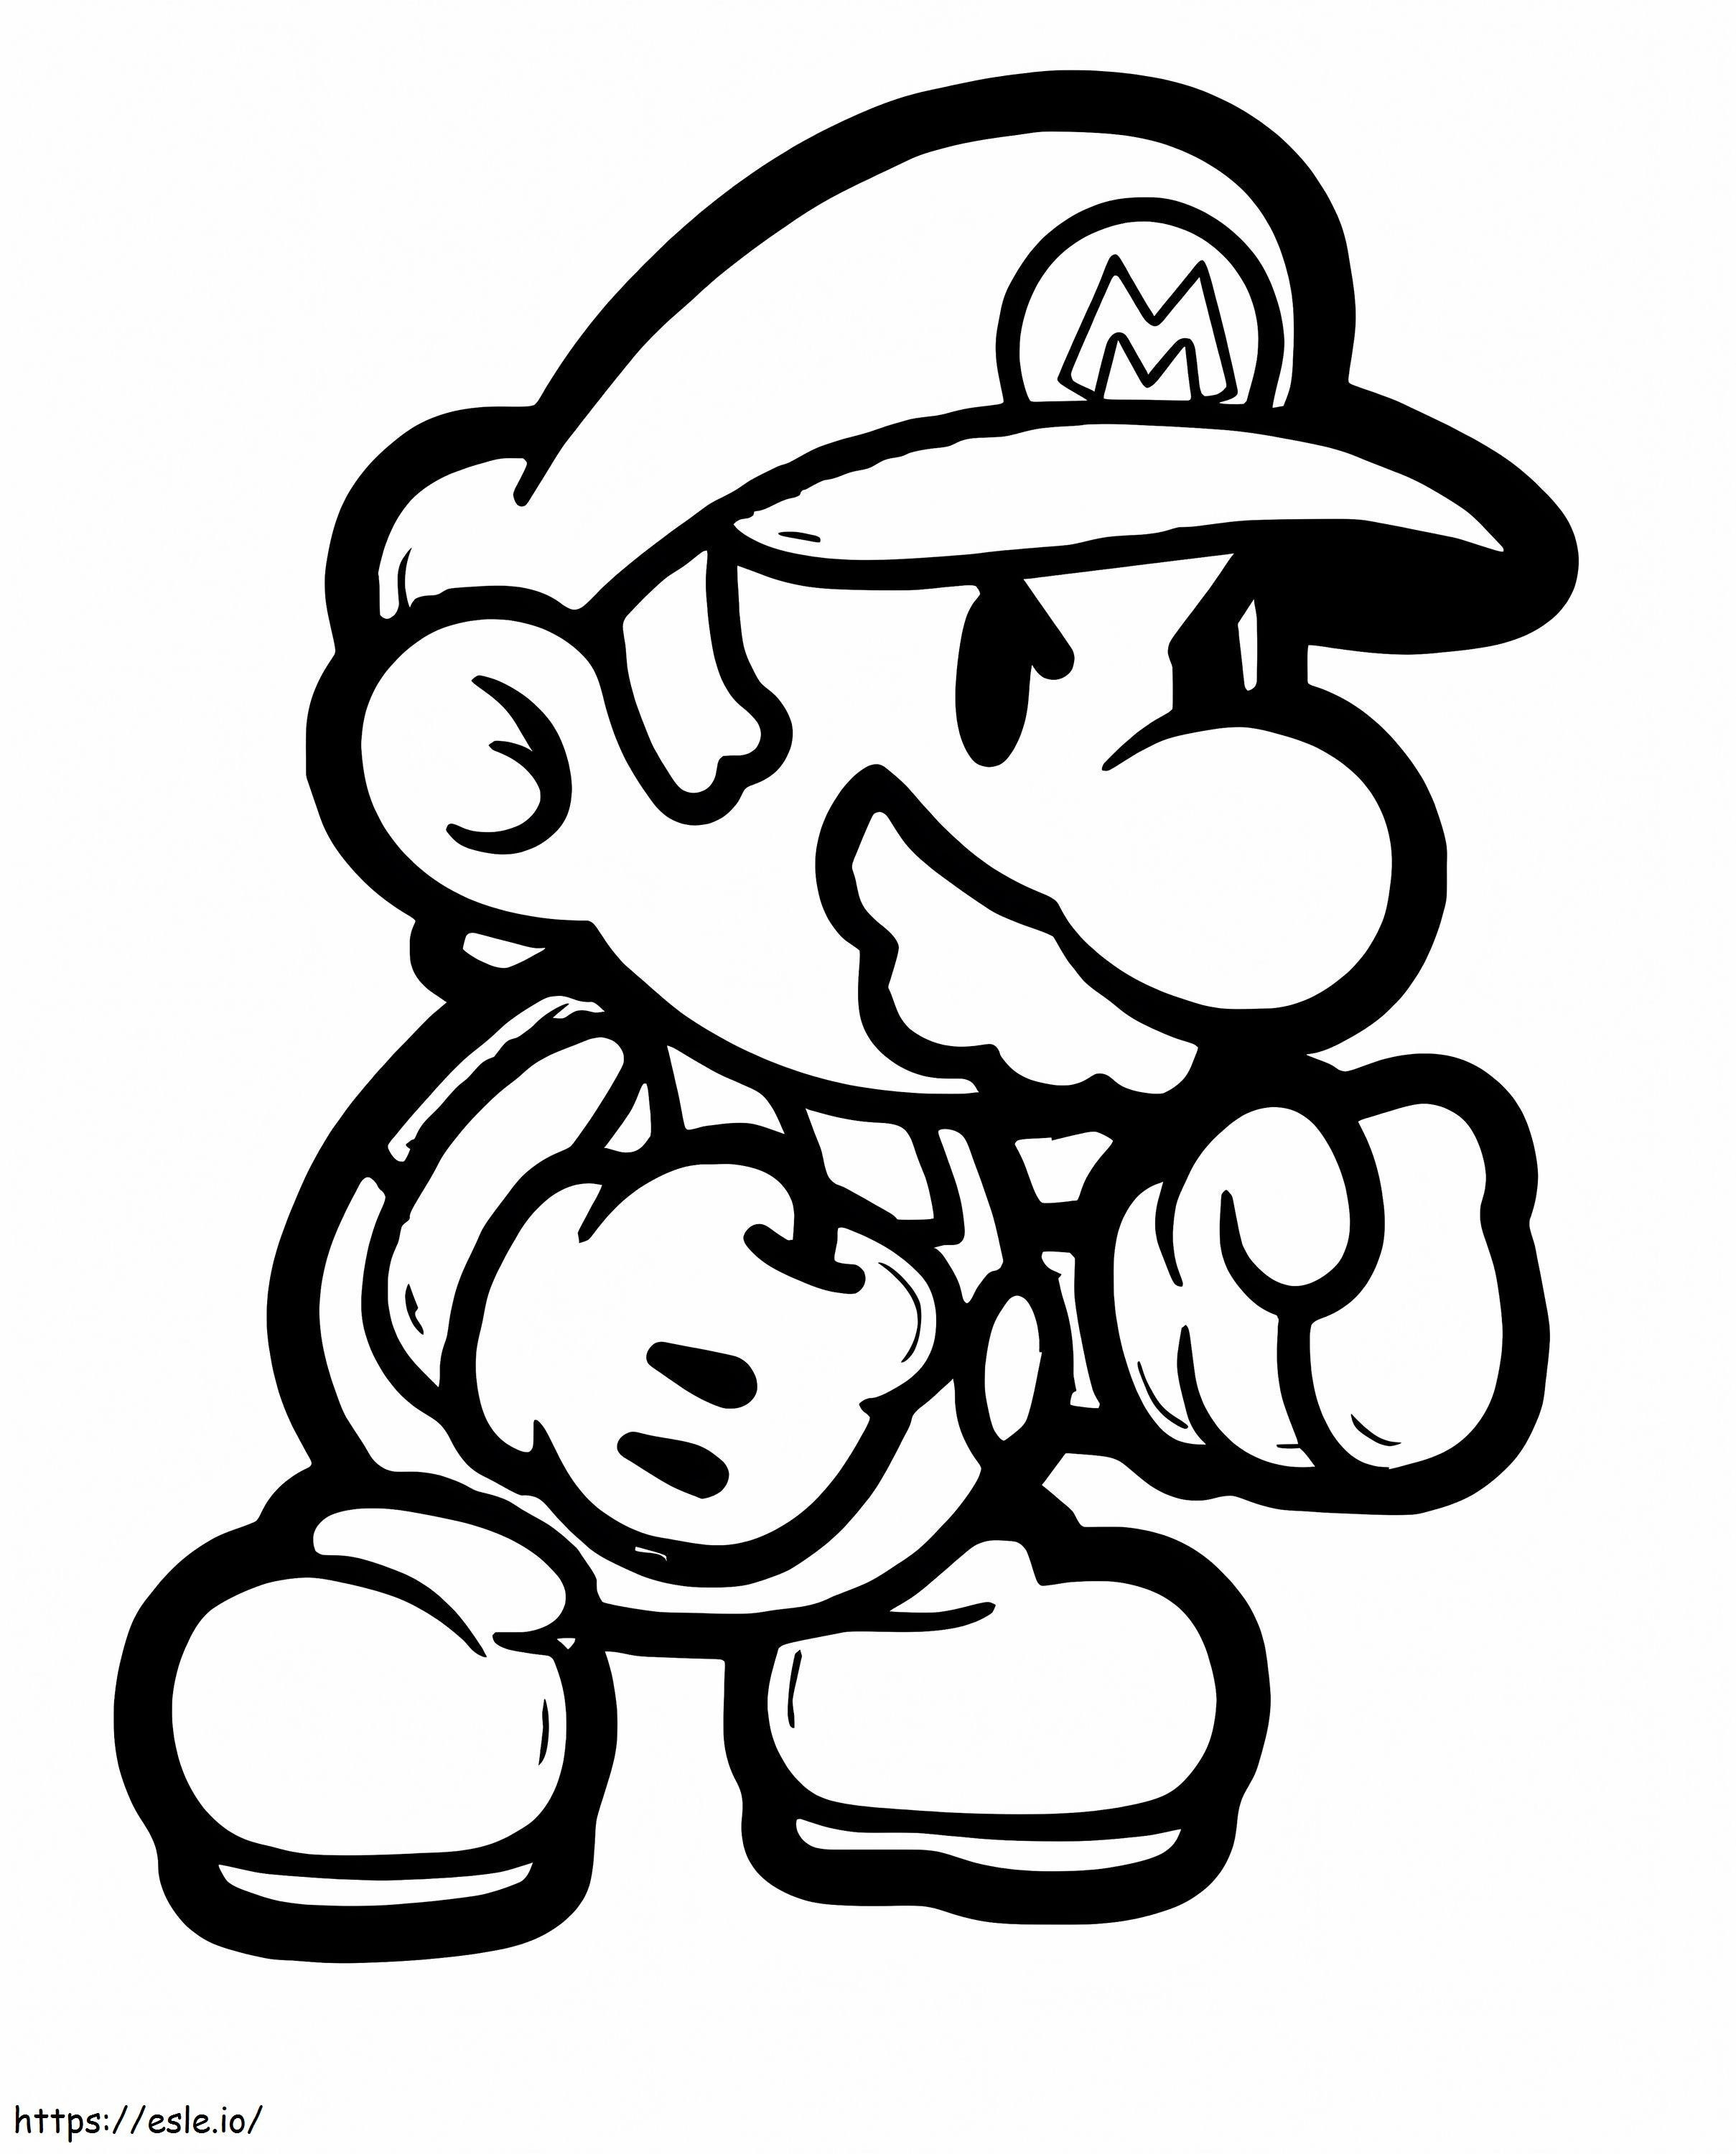 Mario Kickboxing coloring page